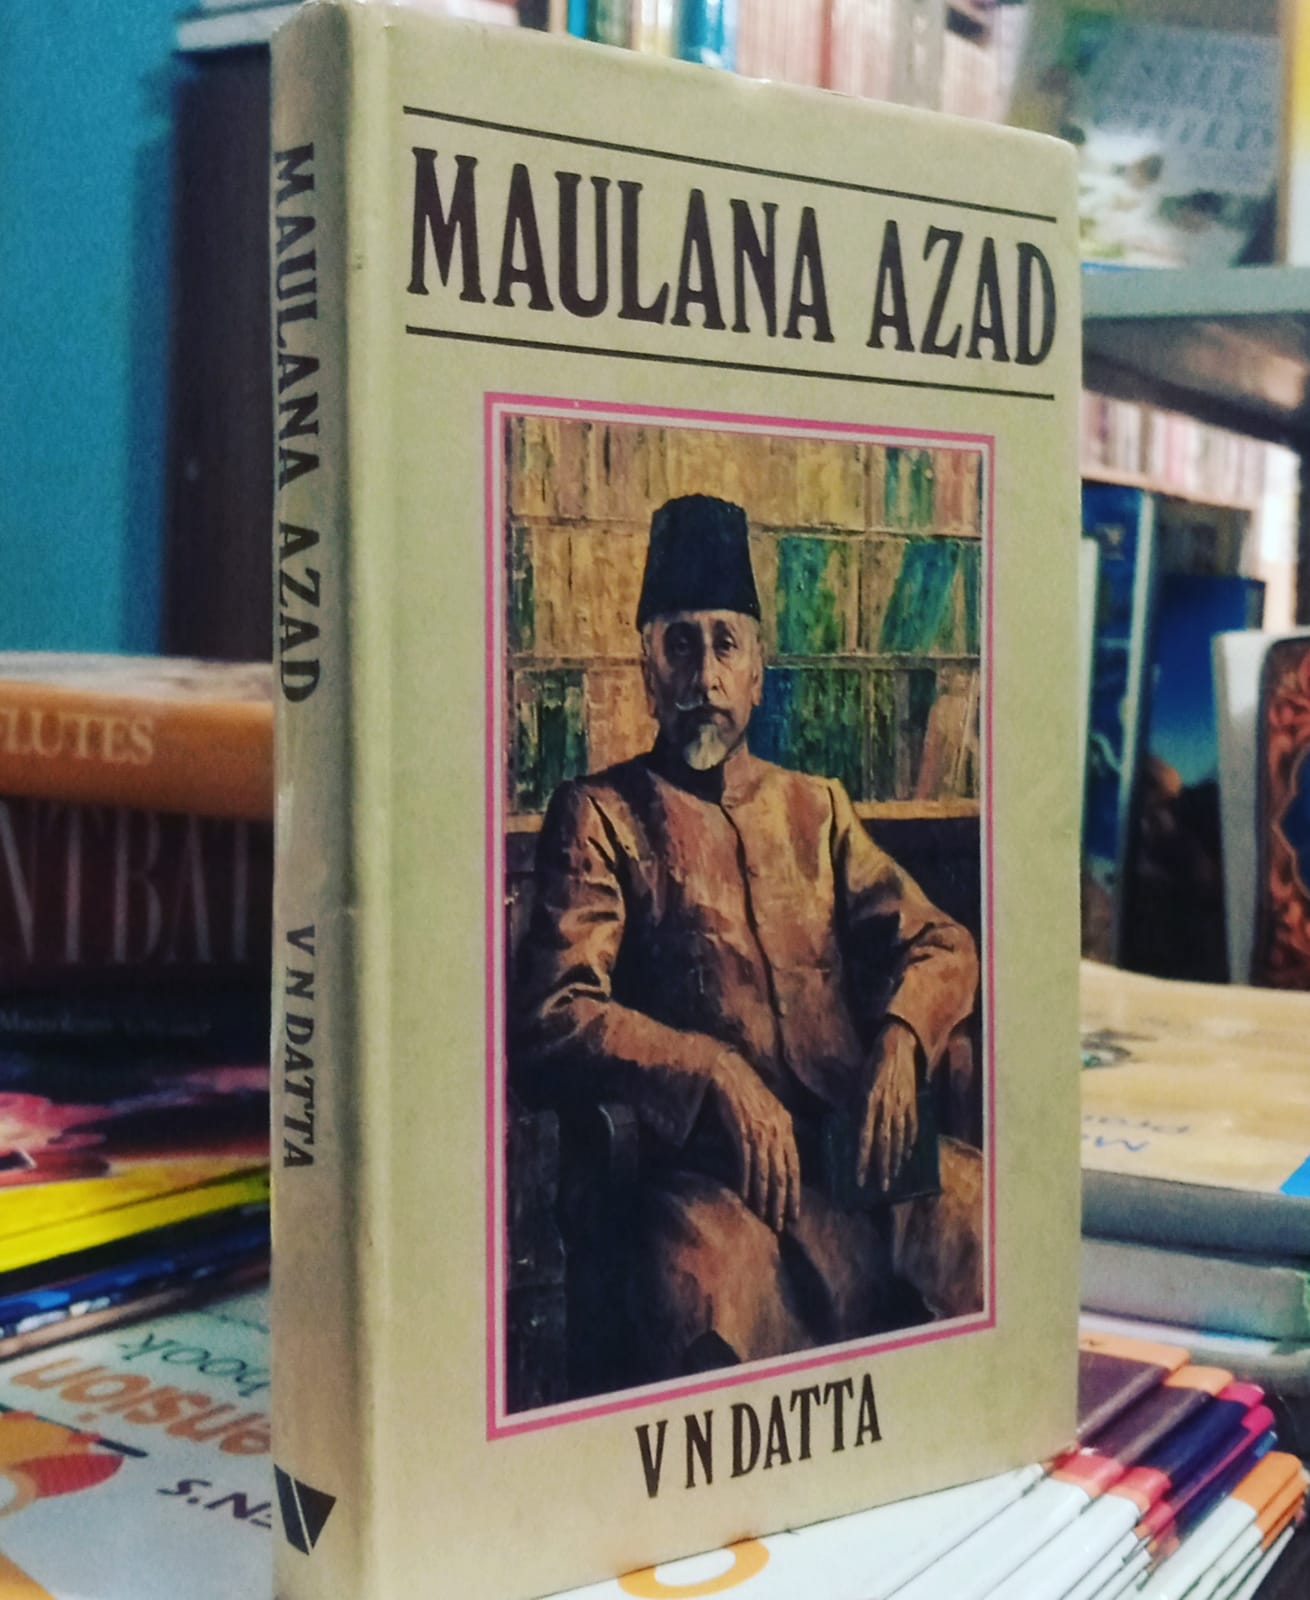 maulana azad by v.n.datta. 1st edition original hardcover